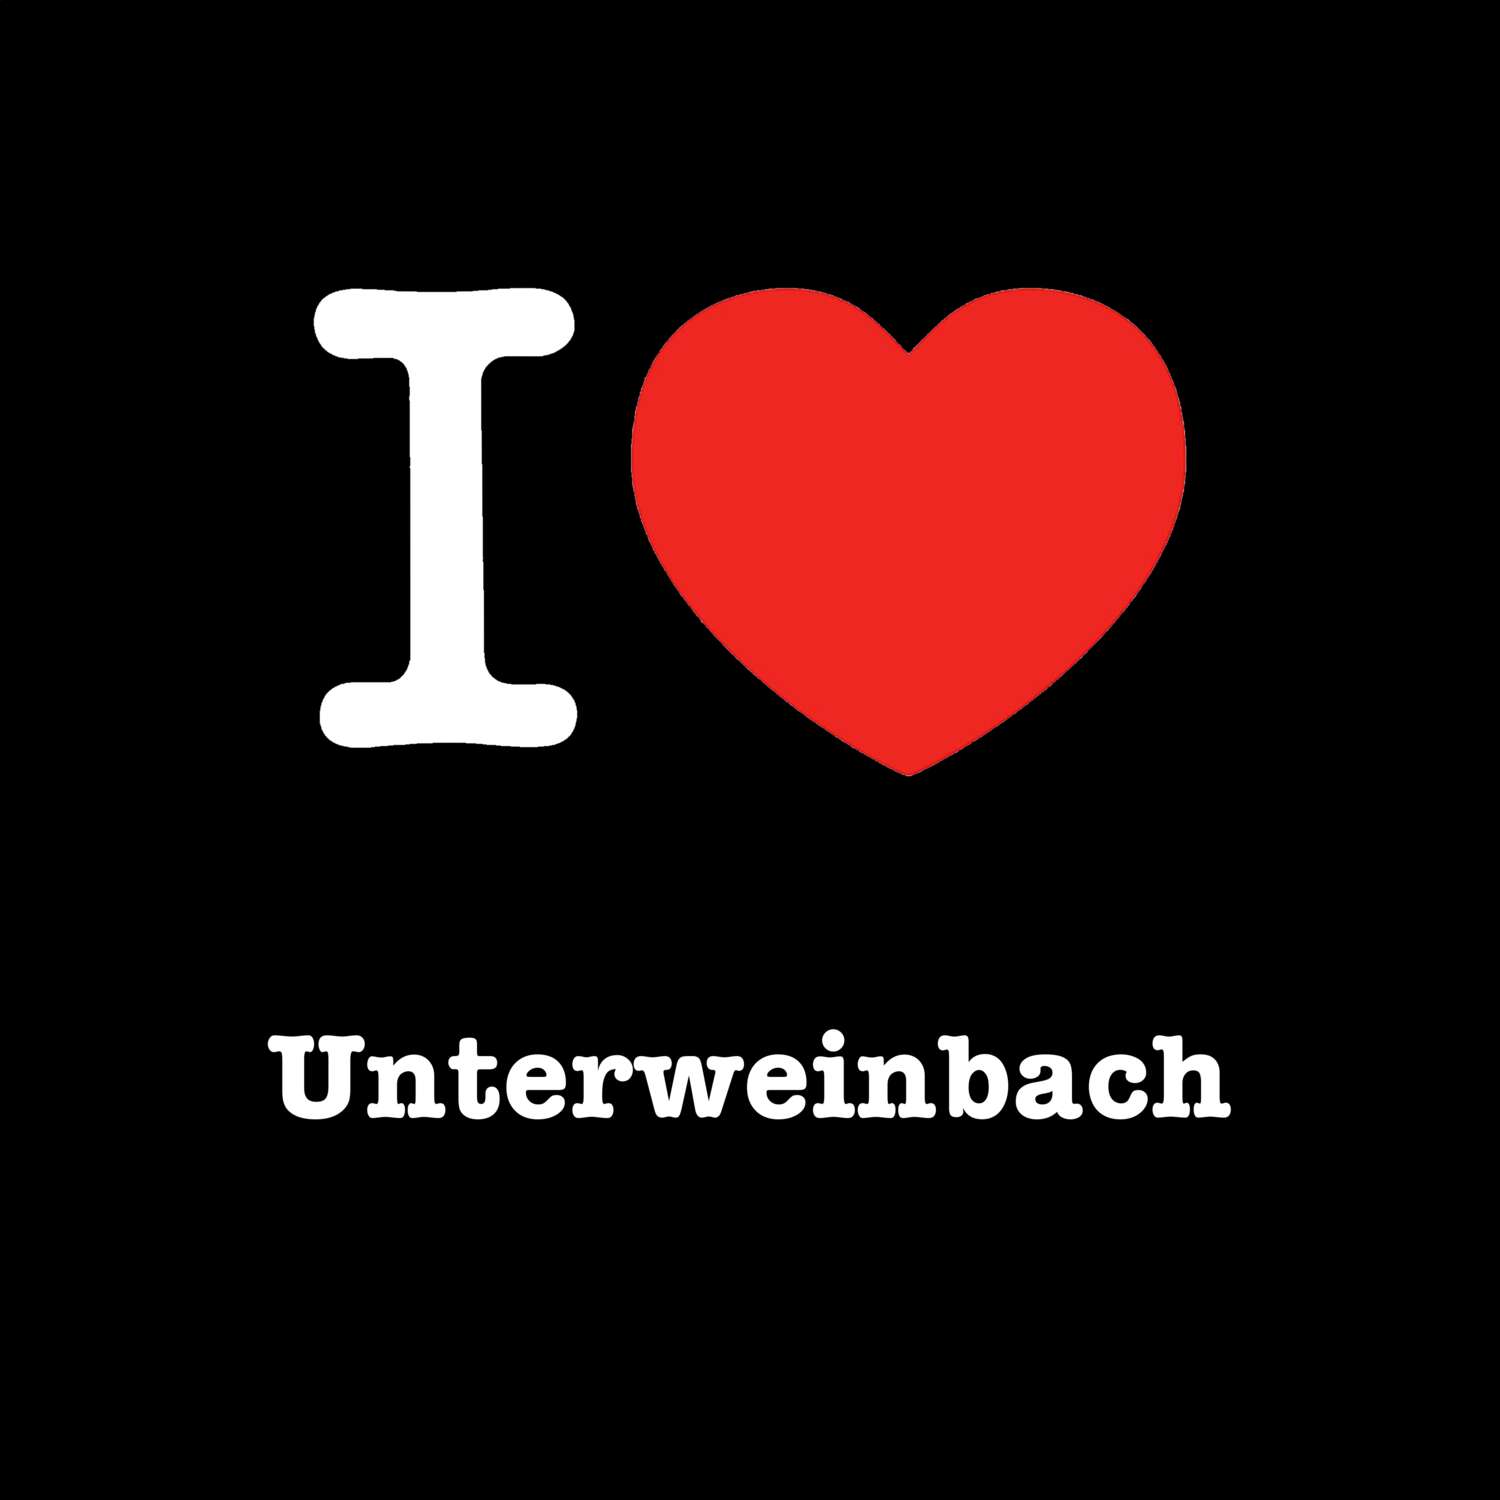 Unterweinbach T-Shirt »I love«